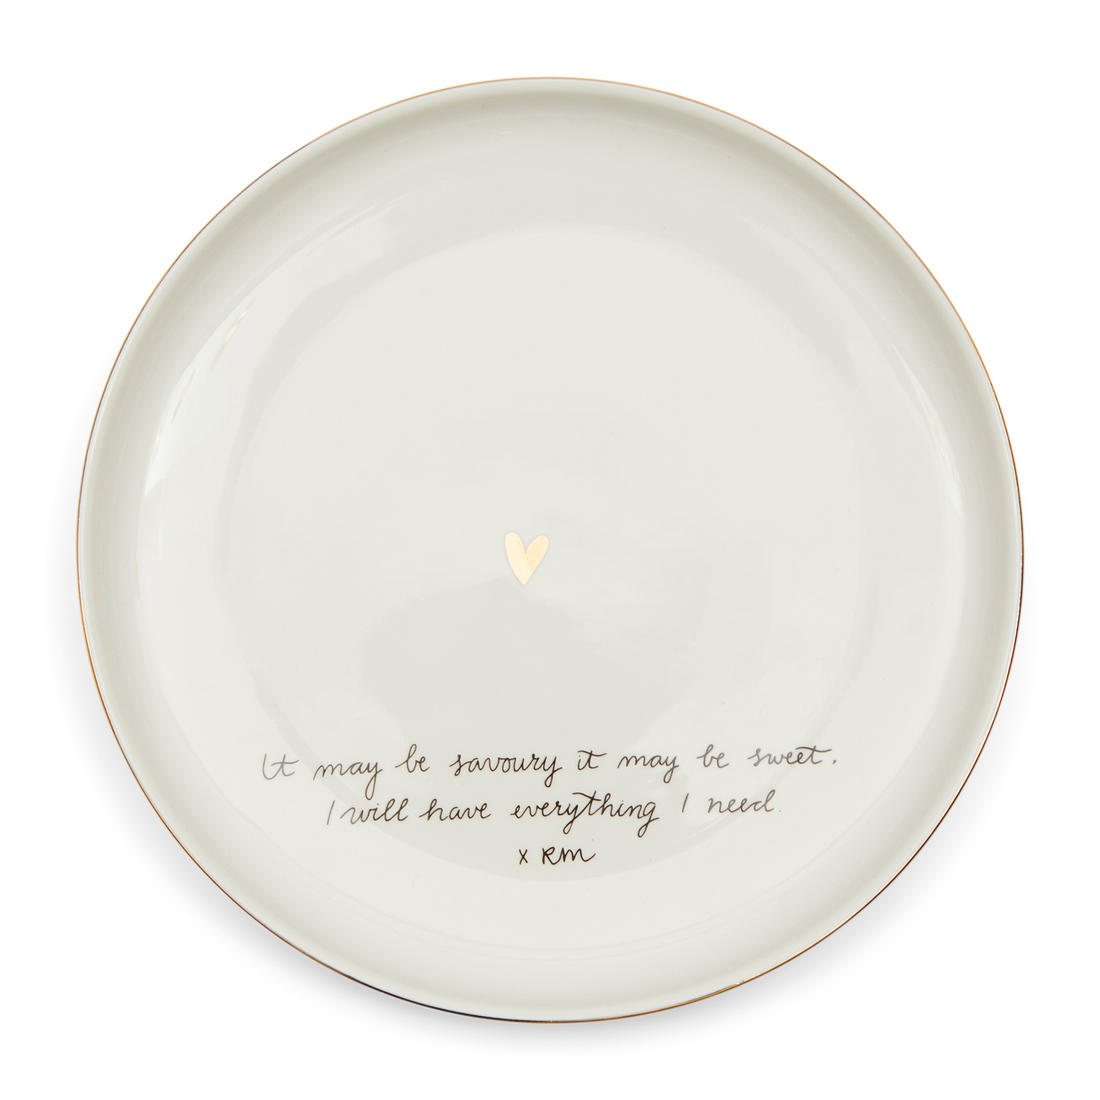 Riviera Maison Ontbijtbord 21 cm - RM Sweet Poem Breakfast Plate - Wit - Porselein